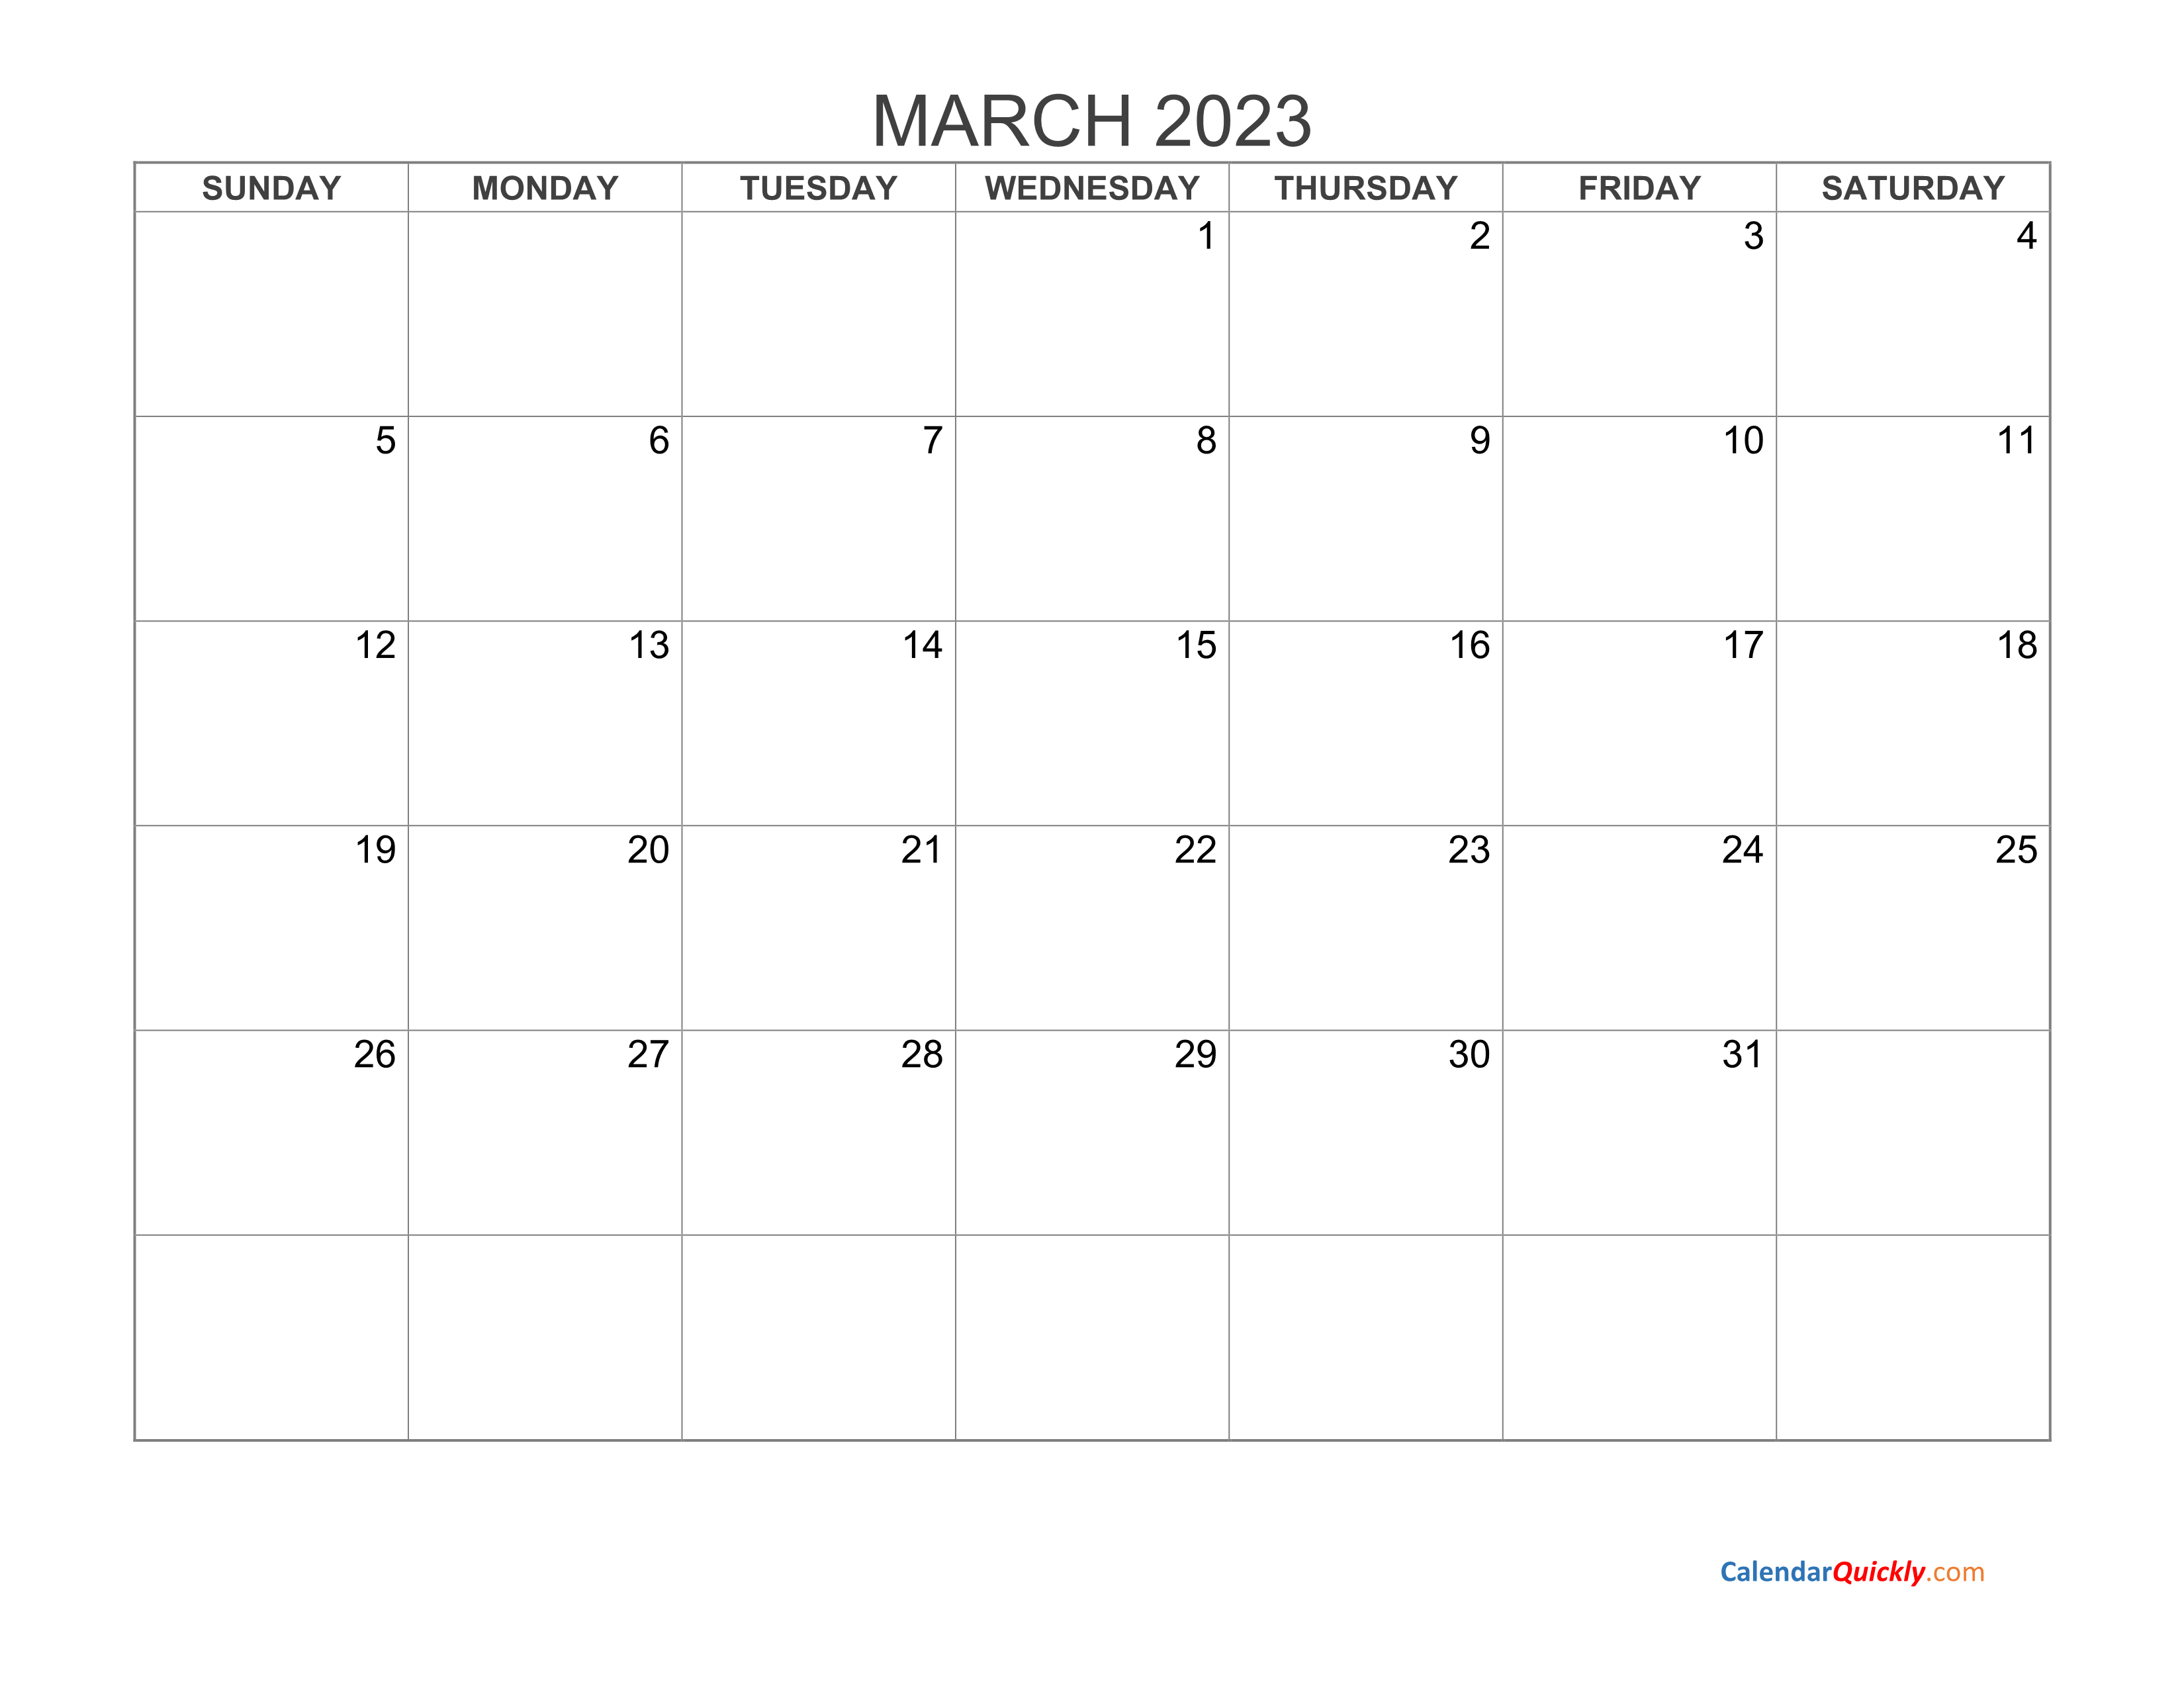 march-2023-blank-calendar-calendar-quickly-free-download-nude-photo